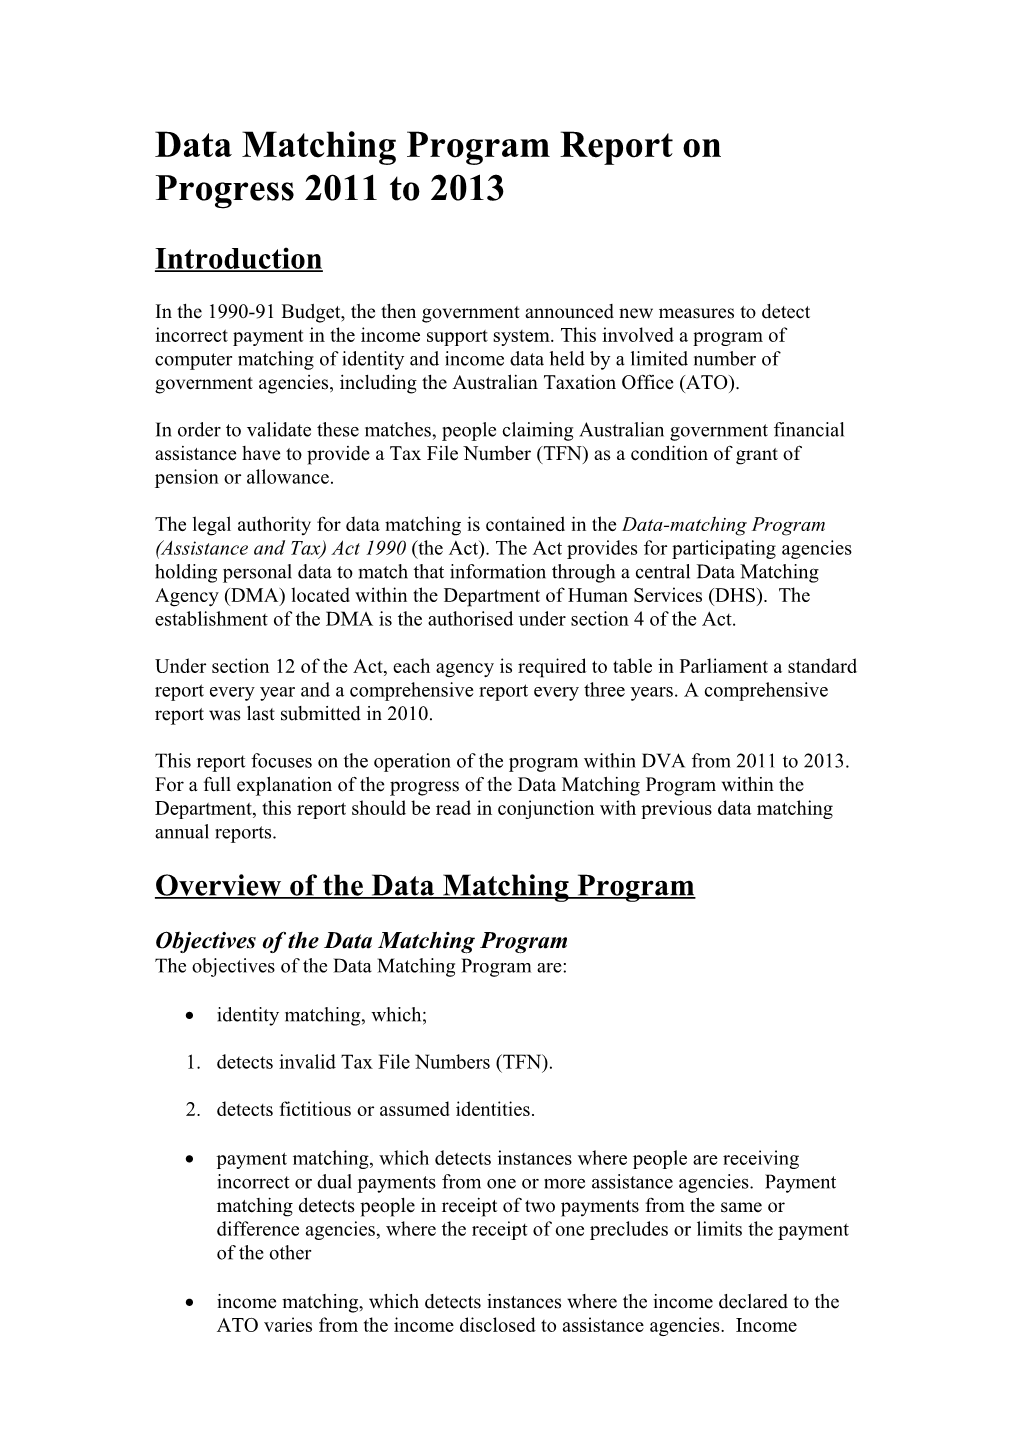 Data Matching Program Report on Progress 2011 to 2013